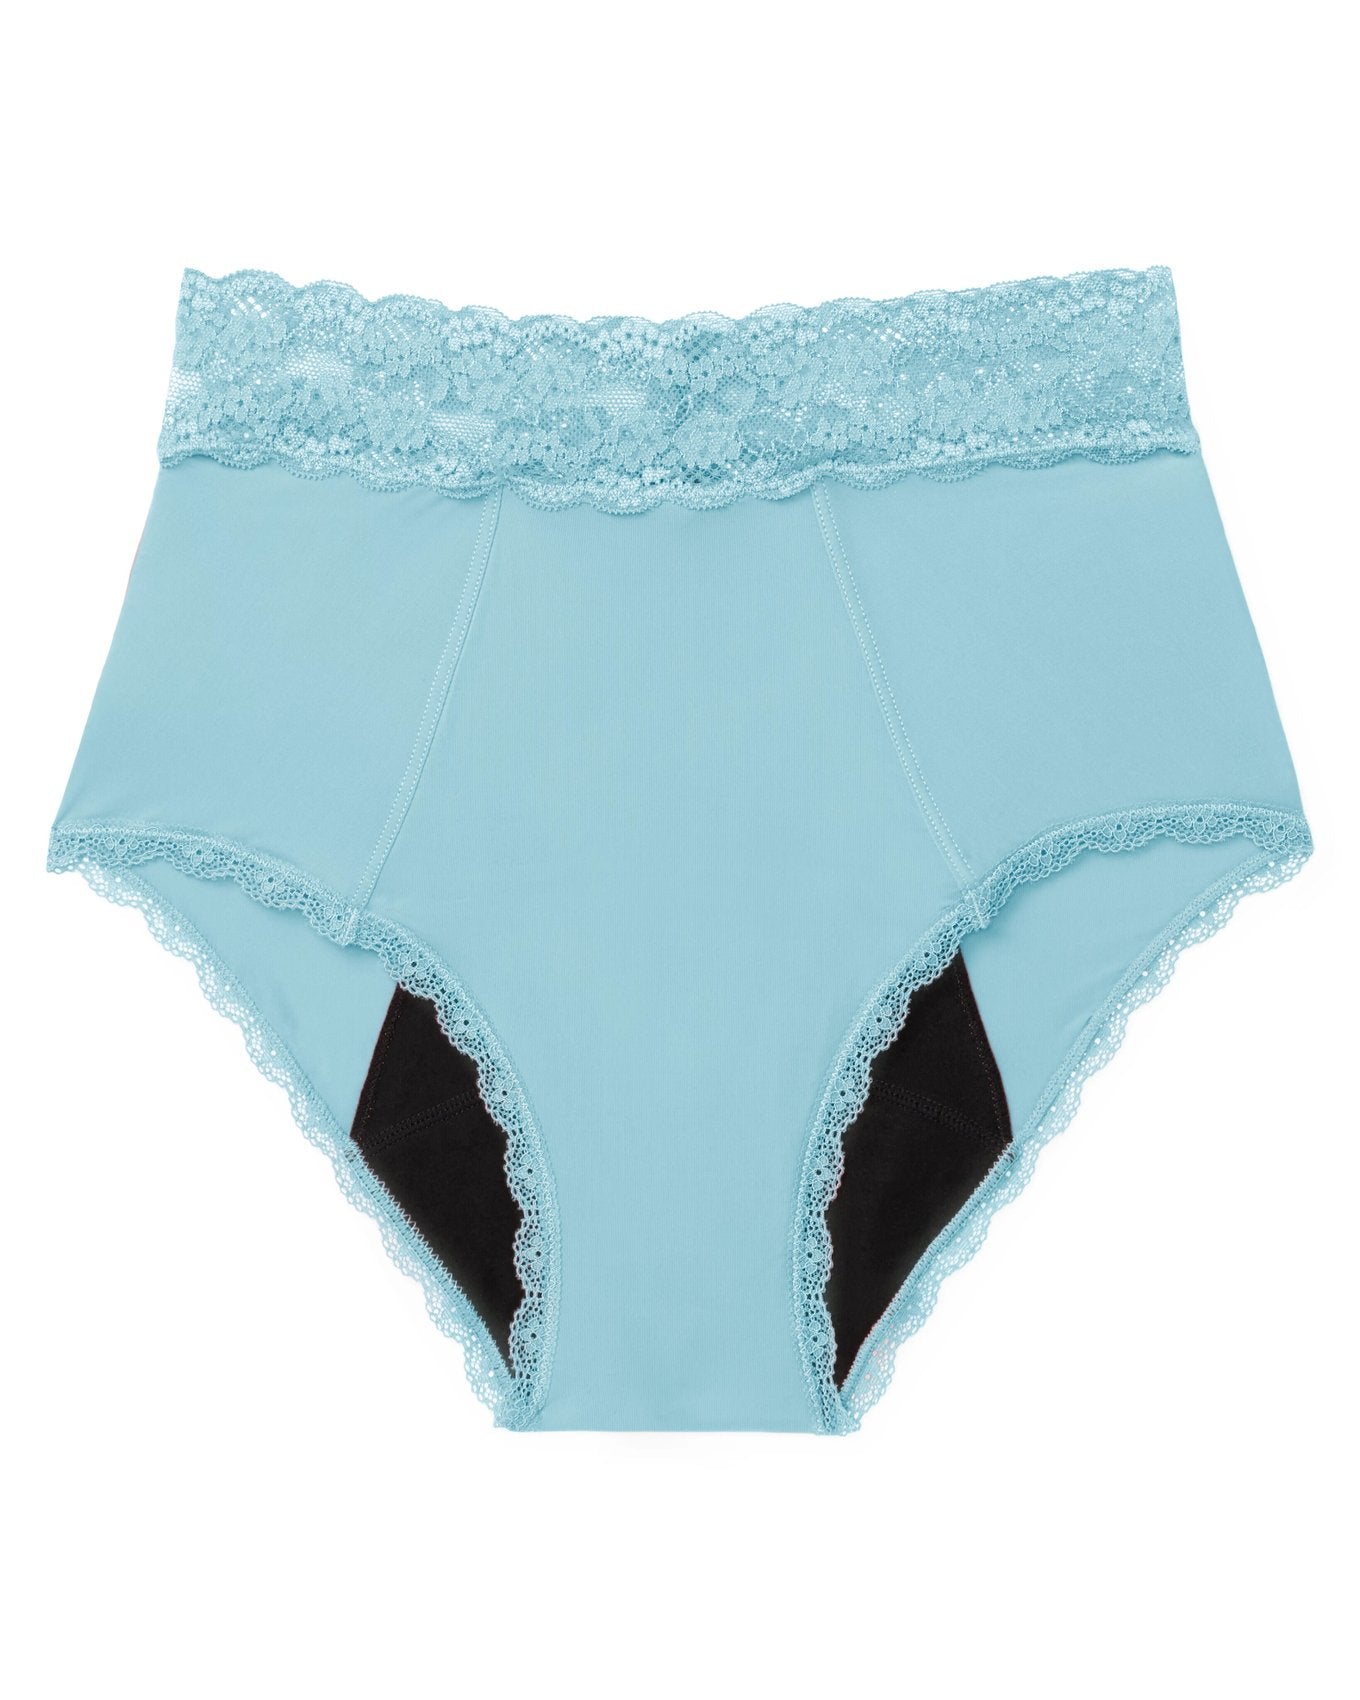 Joyja Amelia period-proof panty in color Iced Aqua and shape high waisted